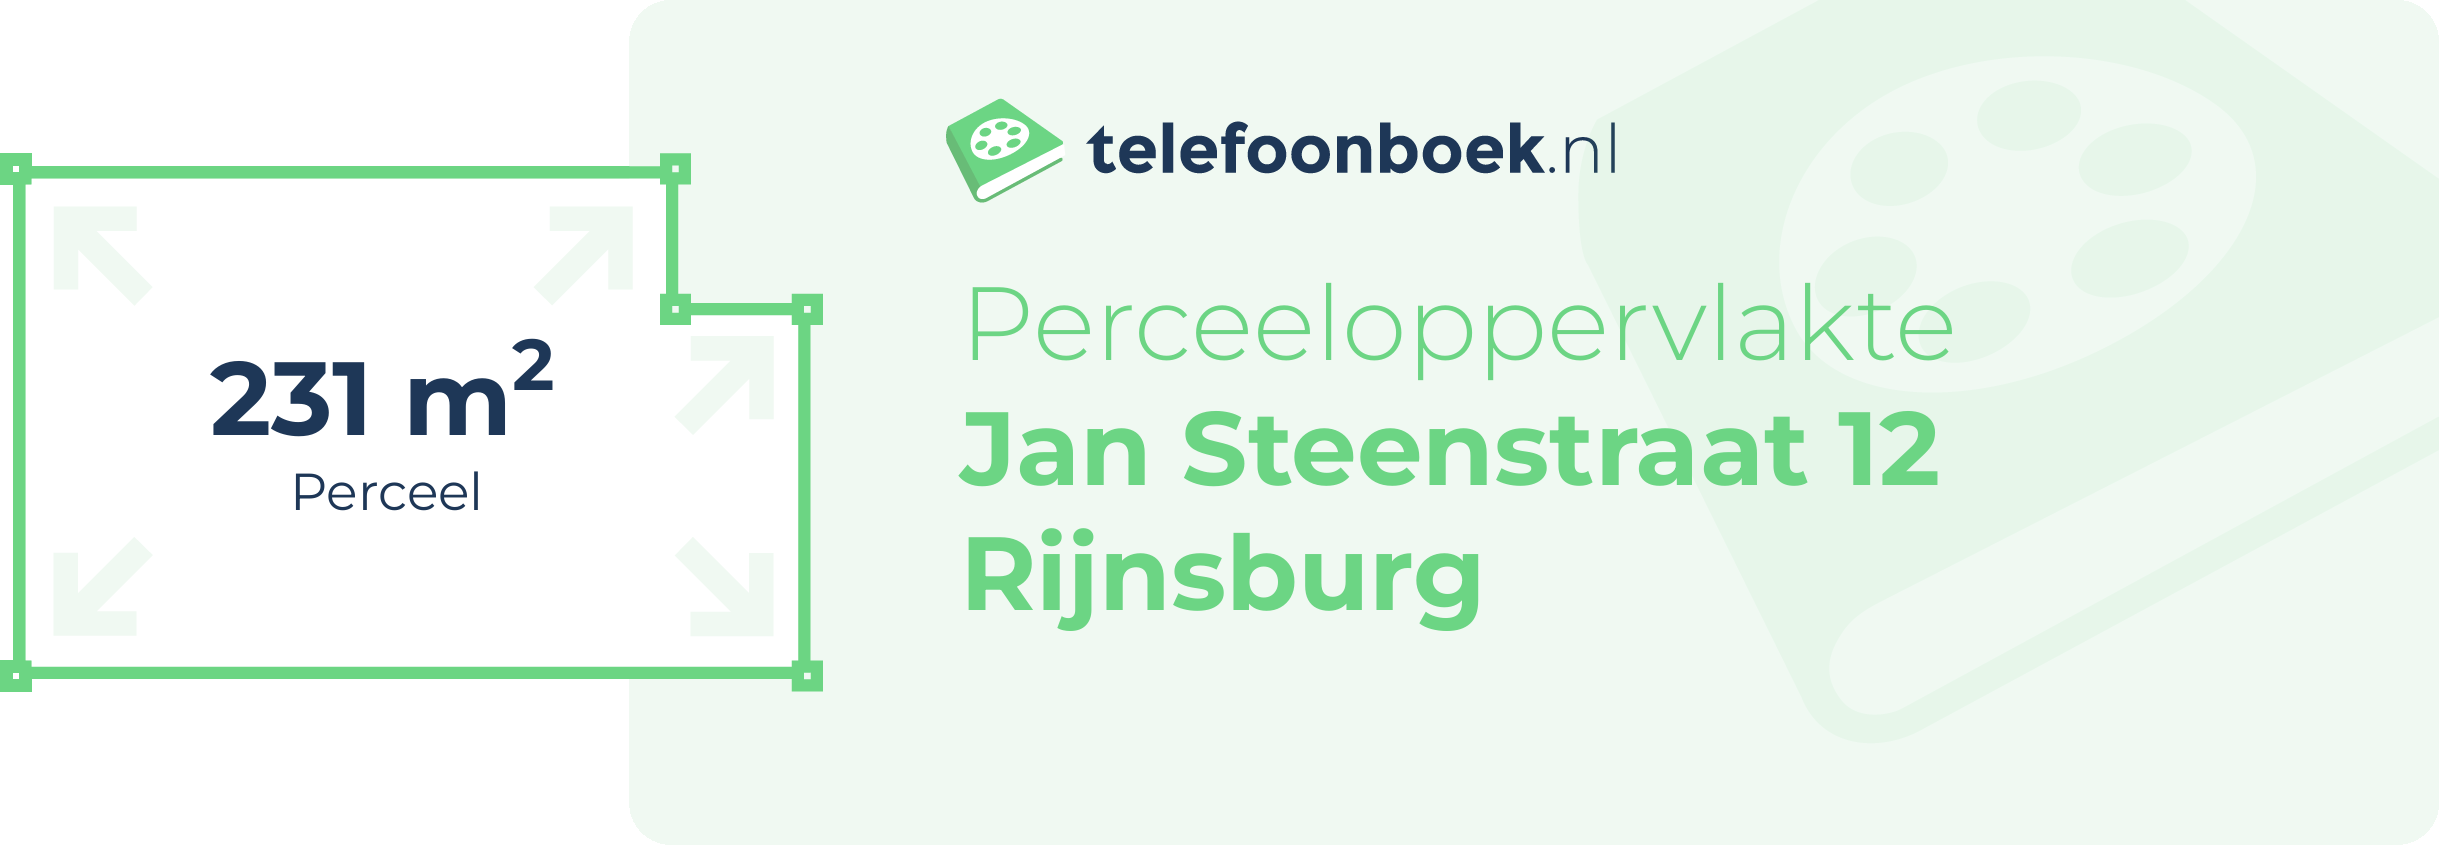 Perceeloppervlakte Jan Steenstraat 12 Rijnsburg